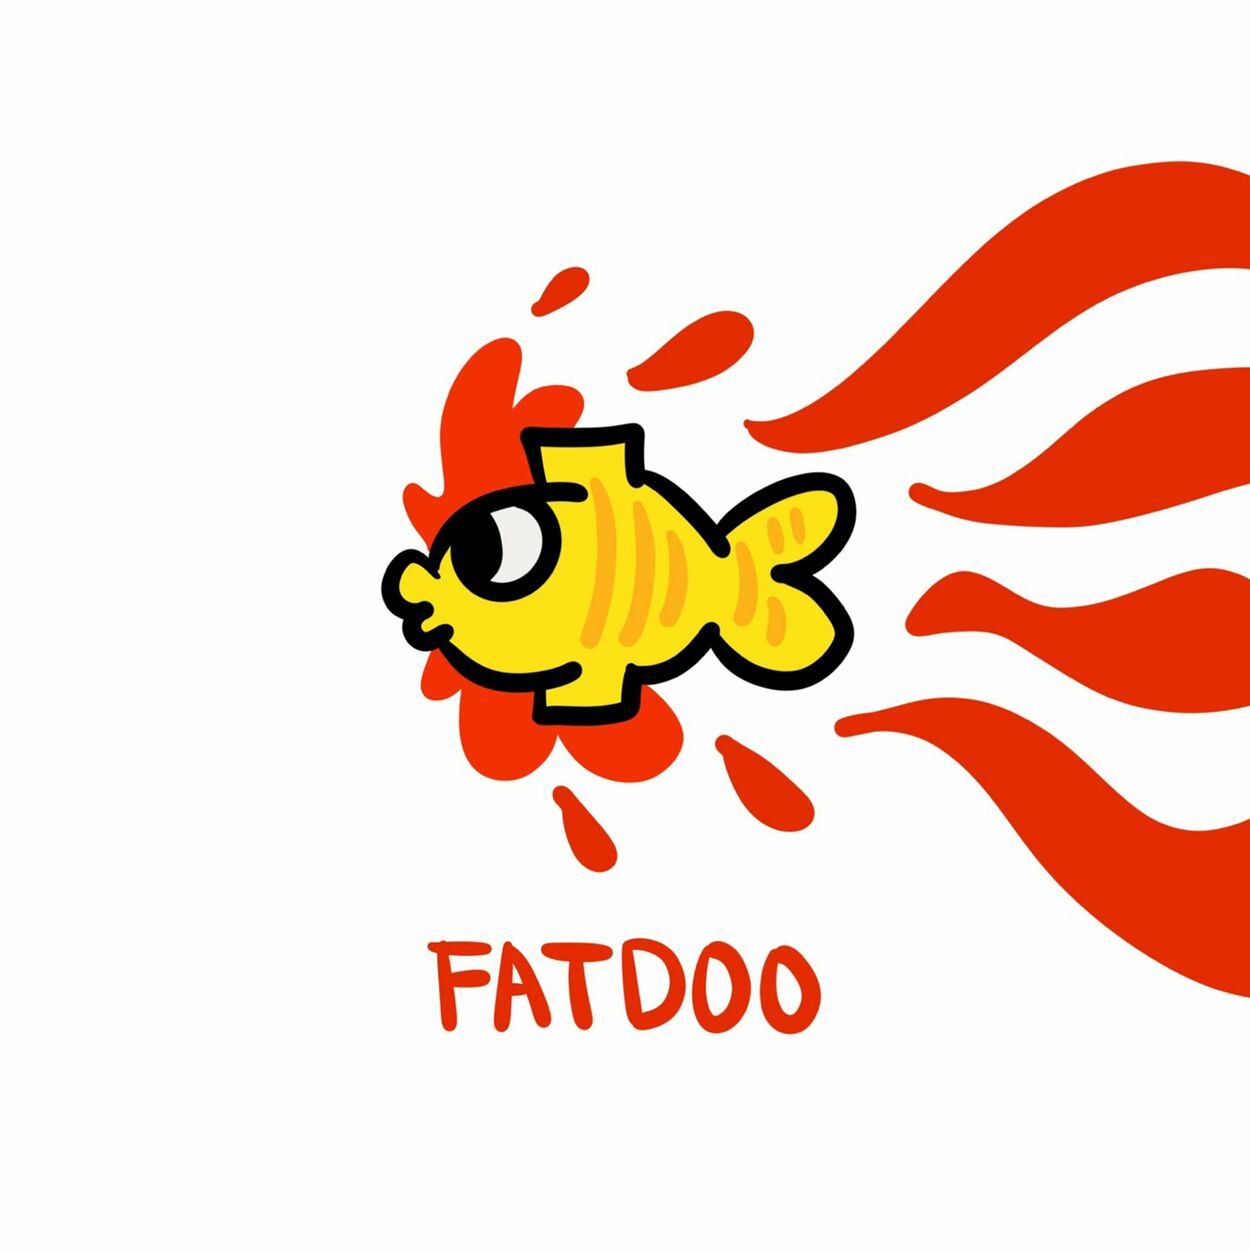 FatDoo – Why Fish Heads On Walls (feat. ChiVee) – Single